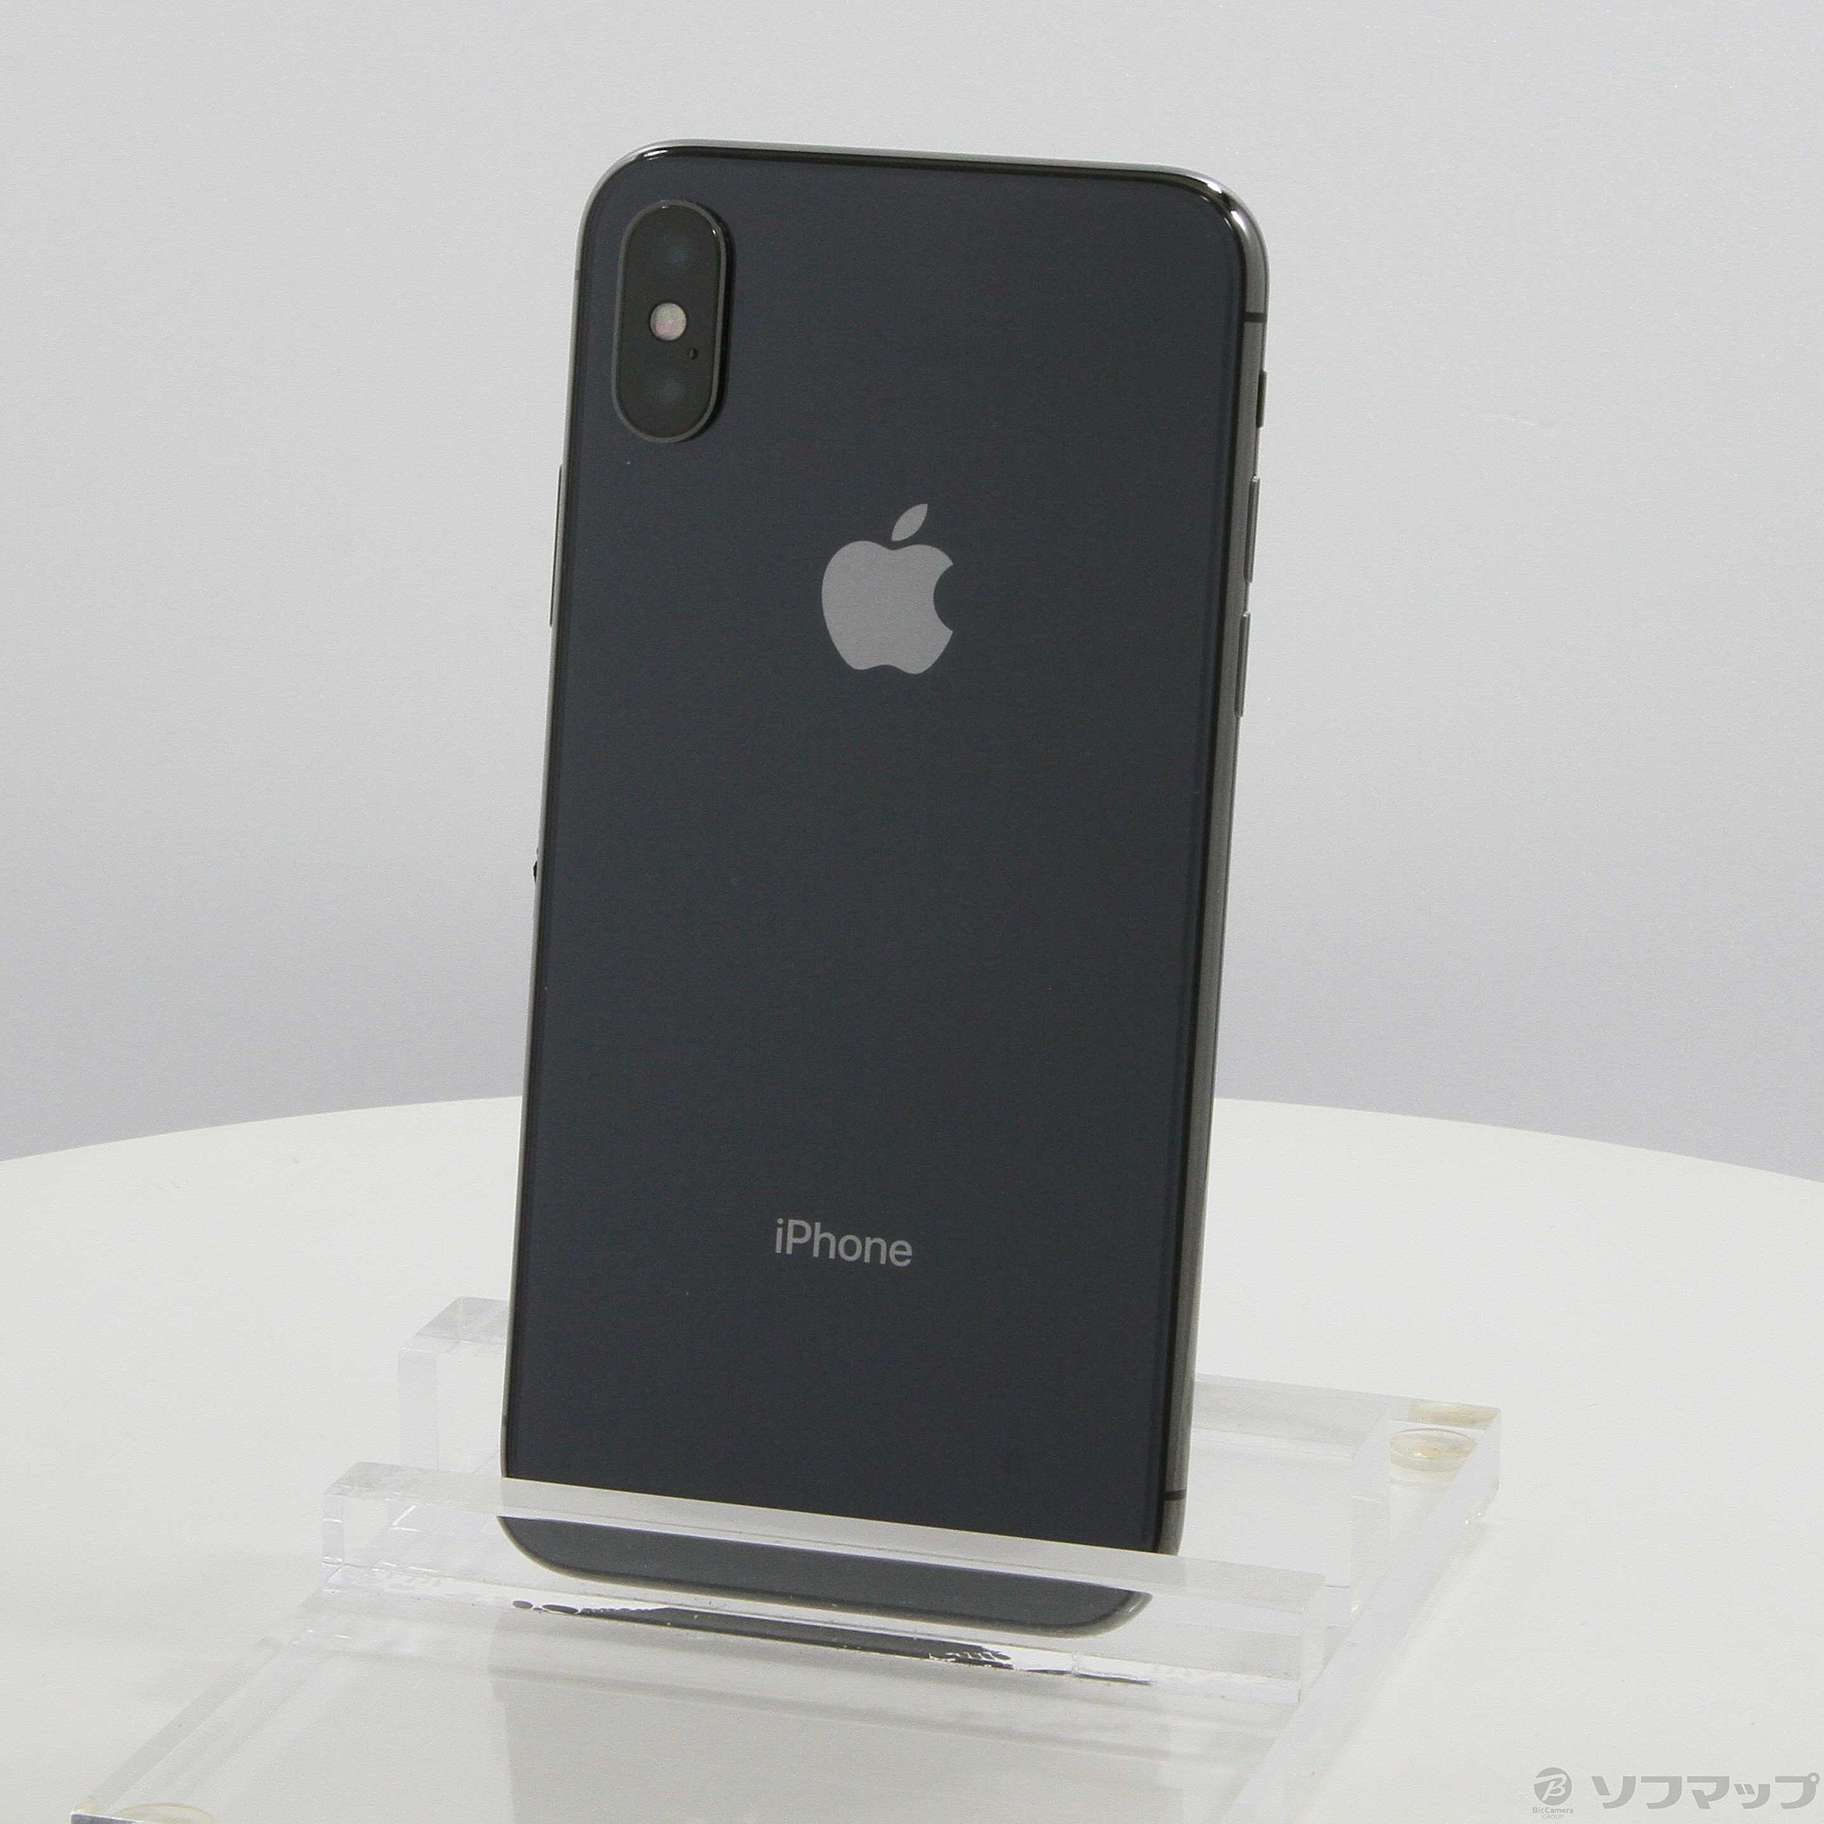 iPhone X SIMフリー スペースグレー 64GB